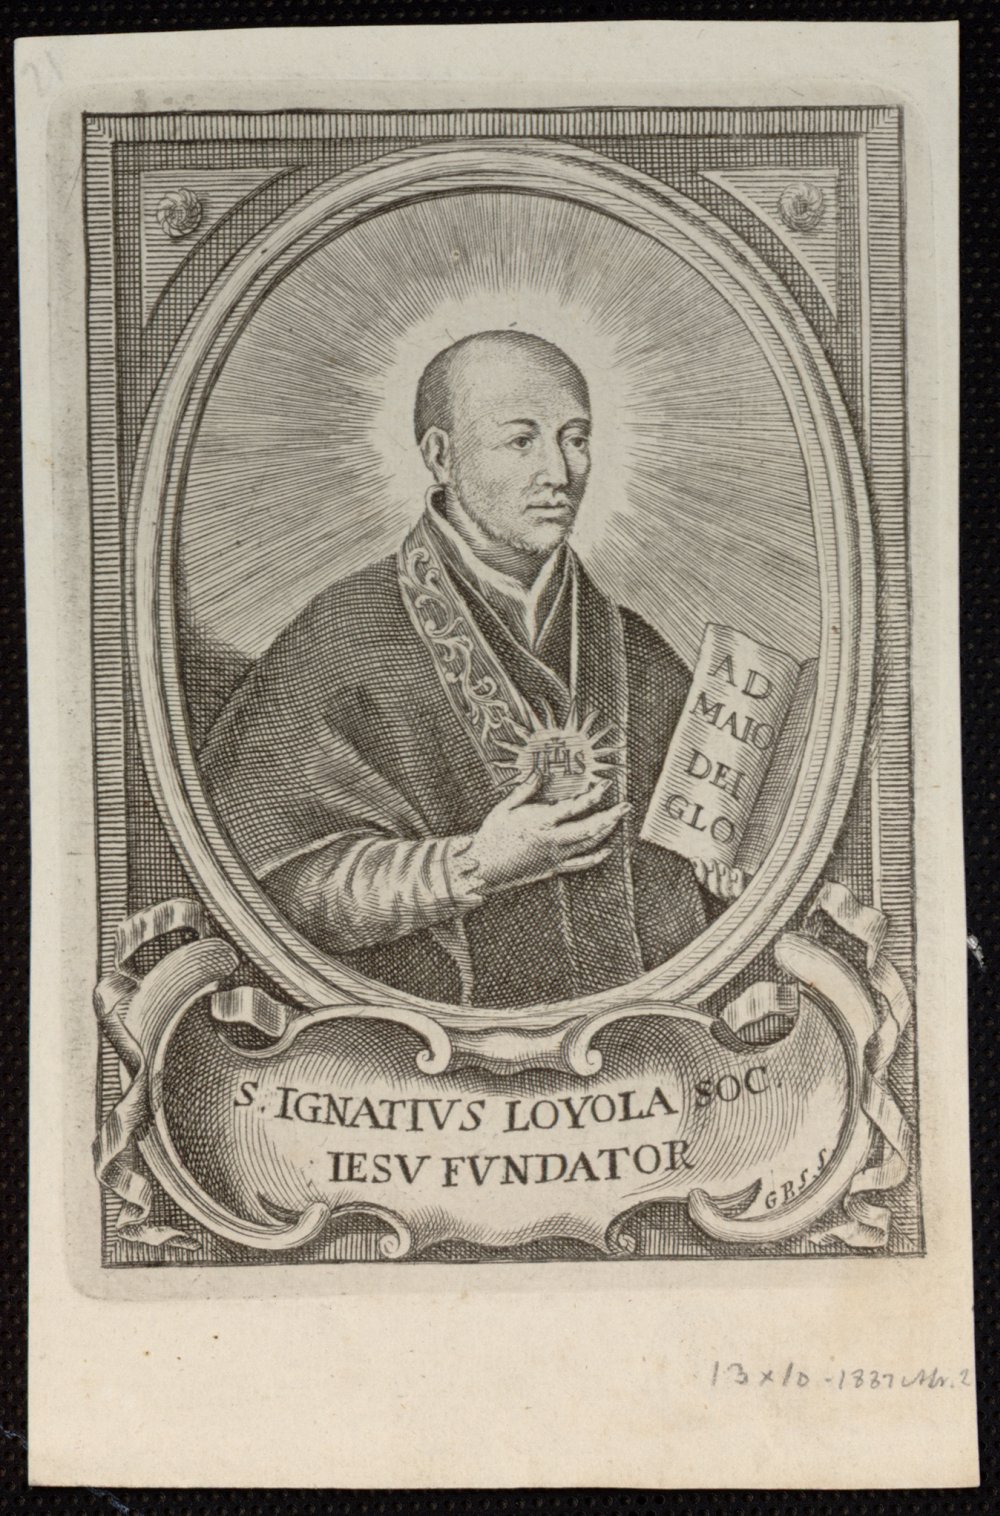 San Ignatius Loyola soc Iesu fundator